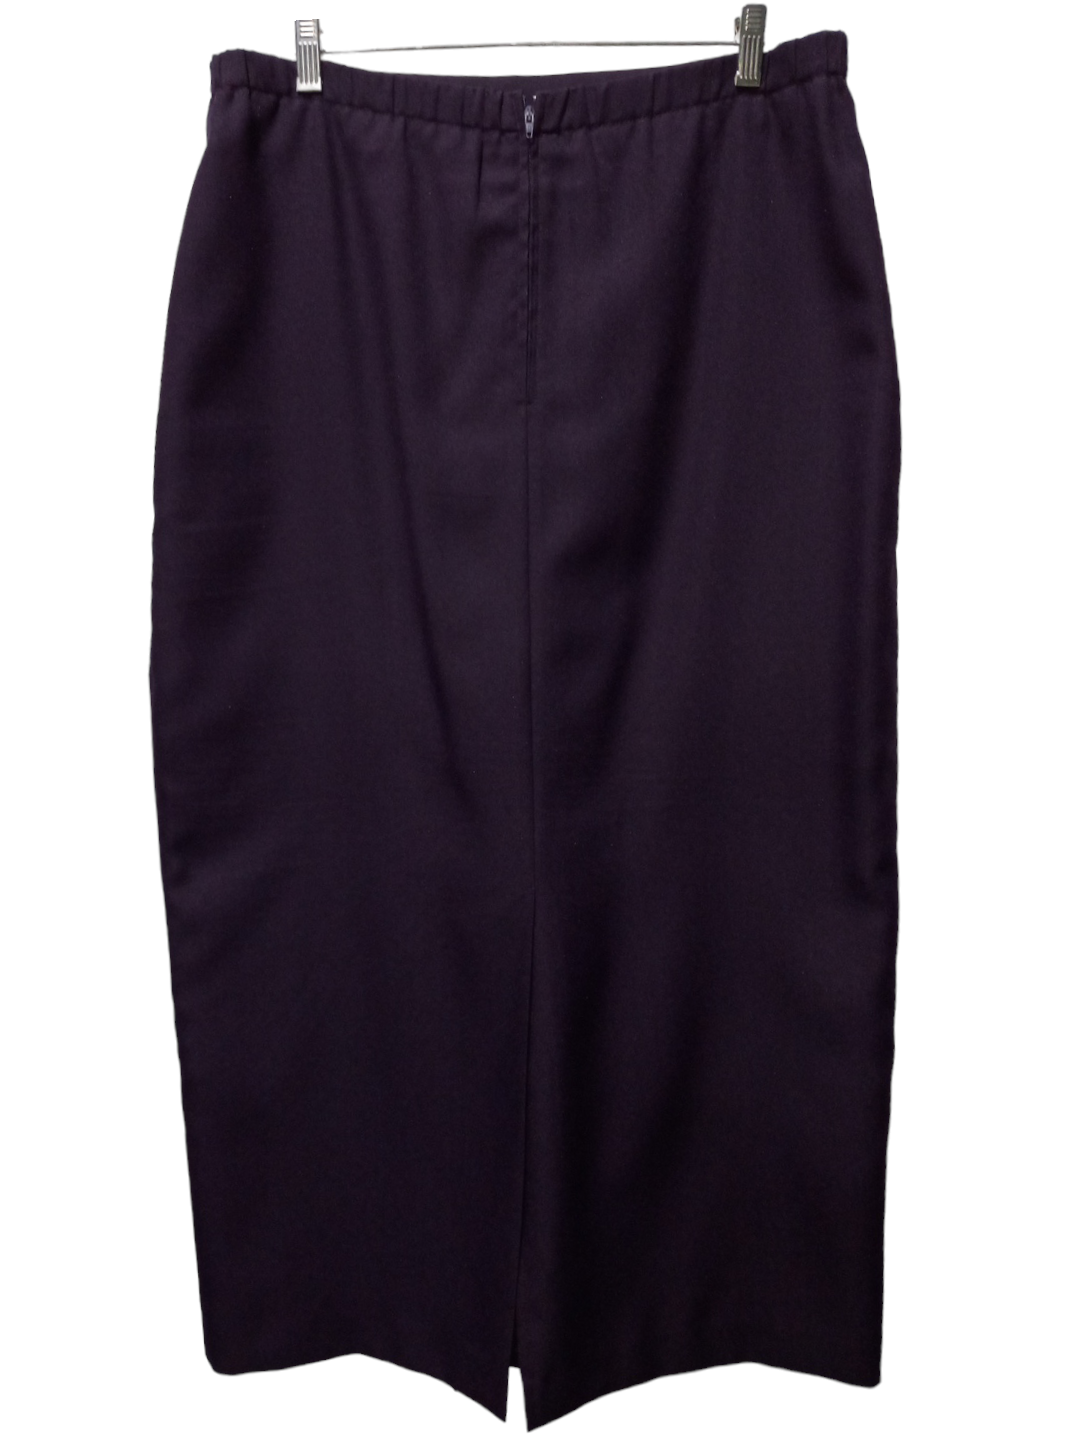 Purple Skirt Maxi Clothes Mentor, Size Xl